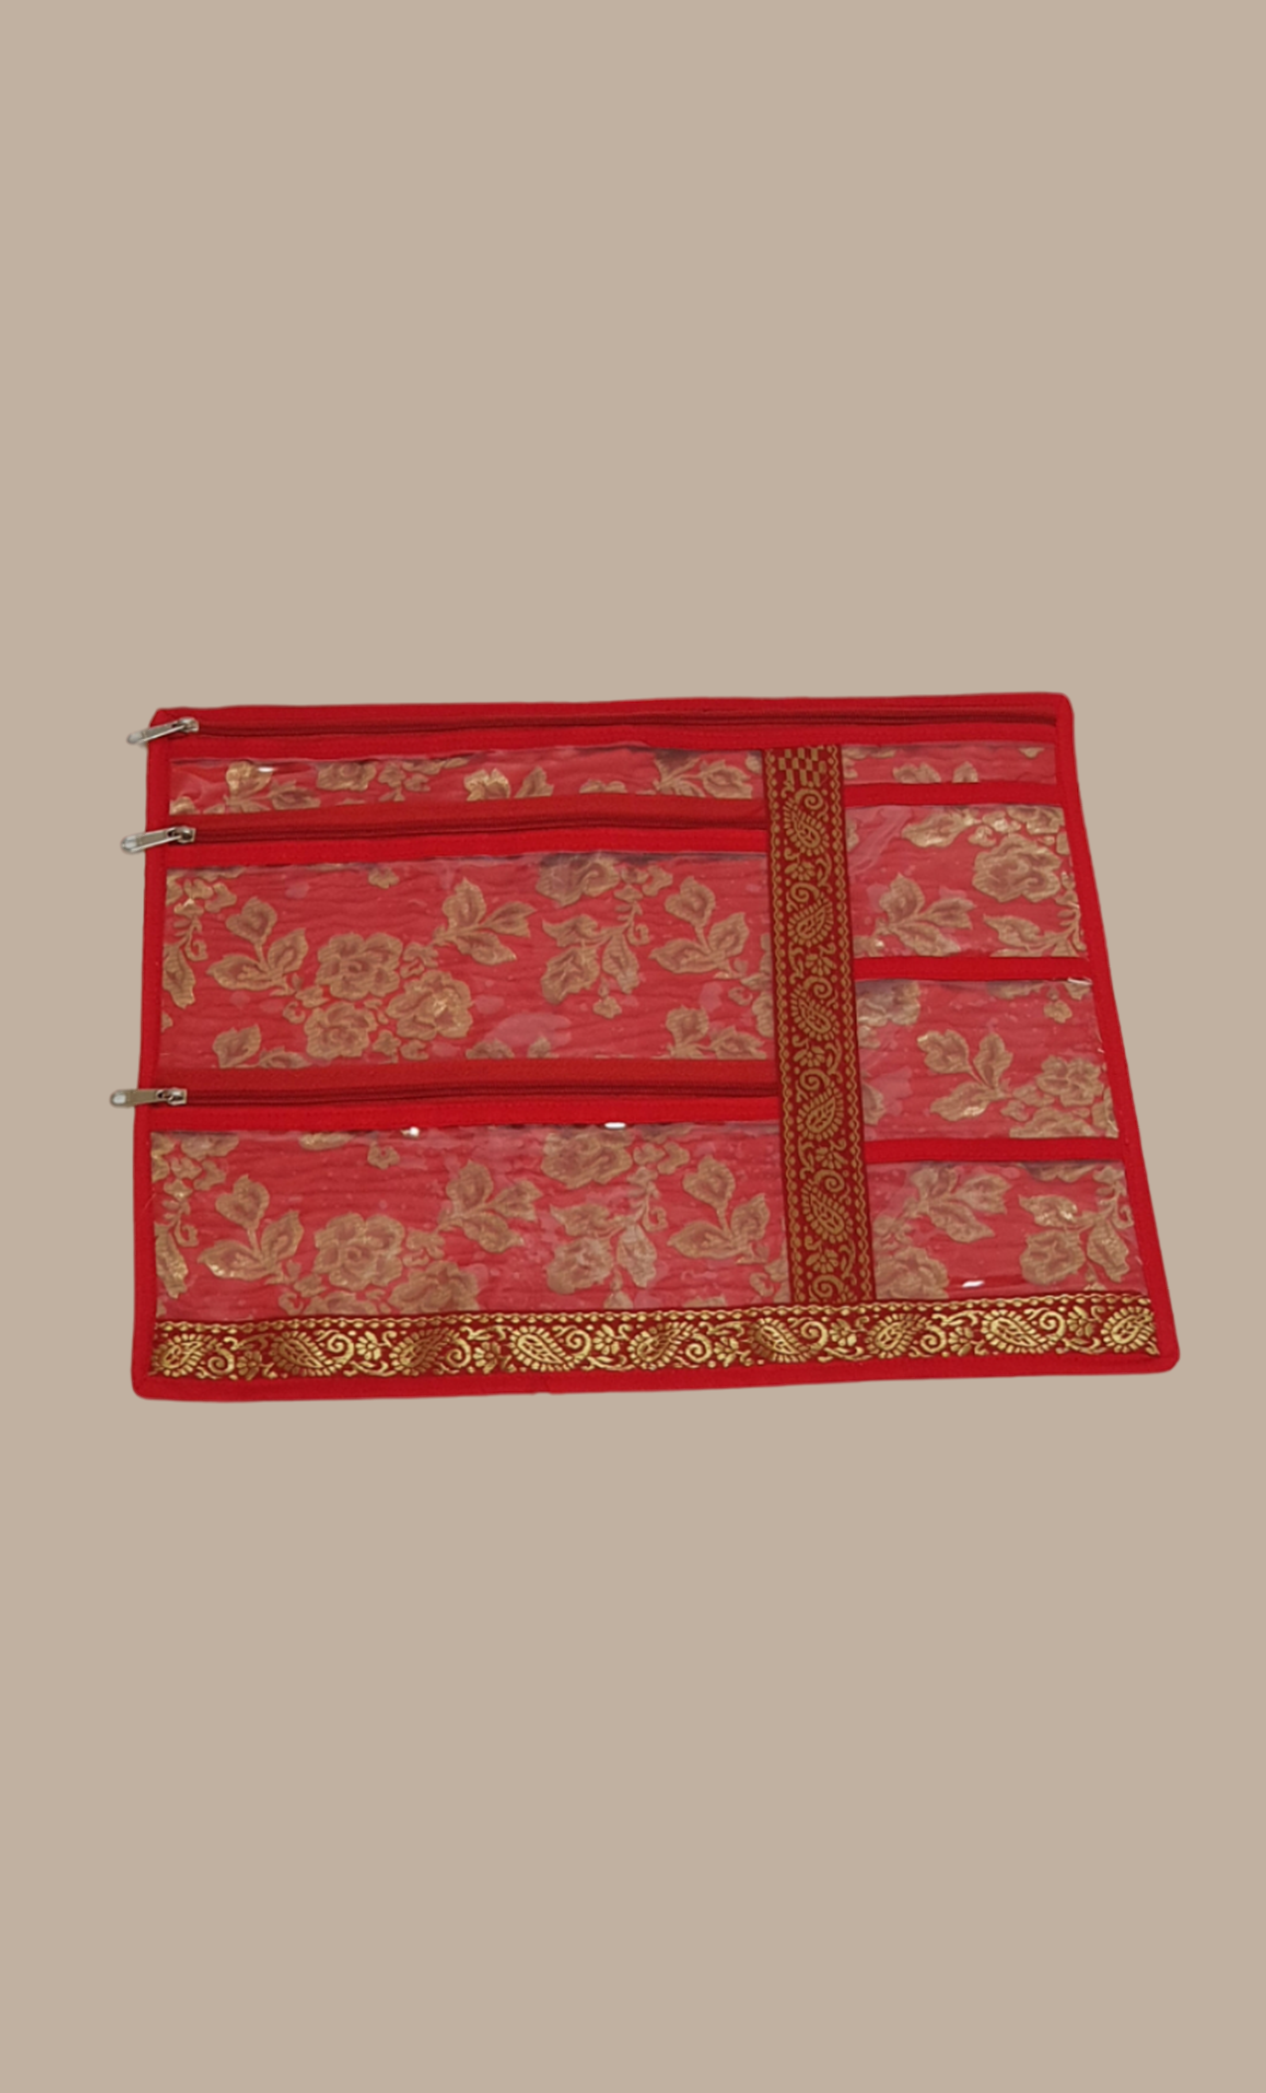 Red & Gold Single Sari Cover